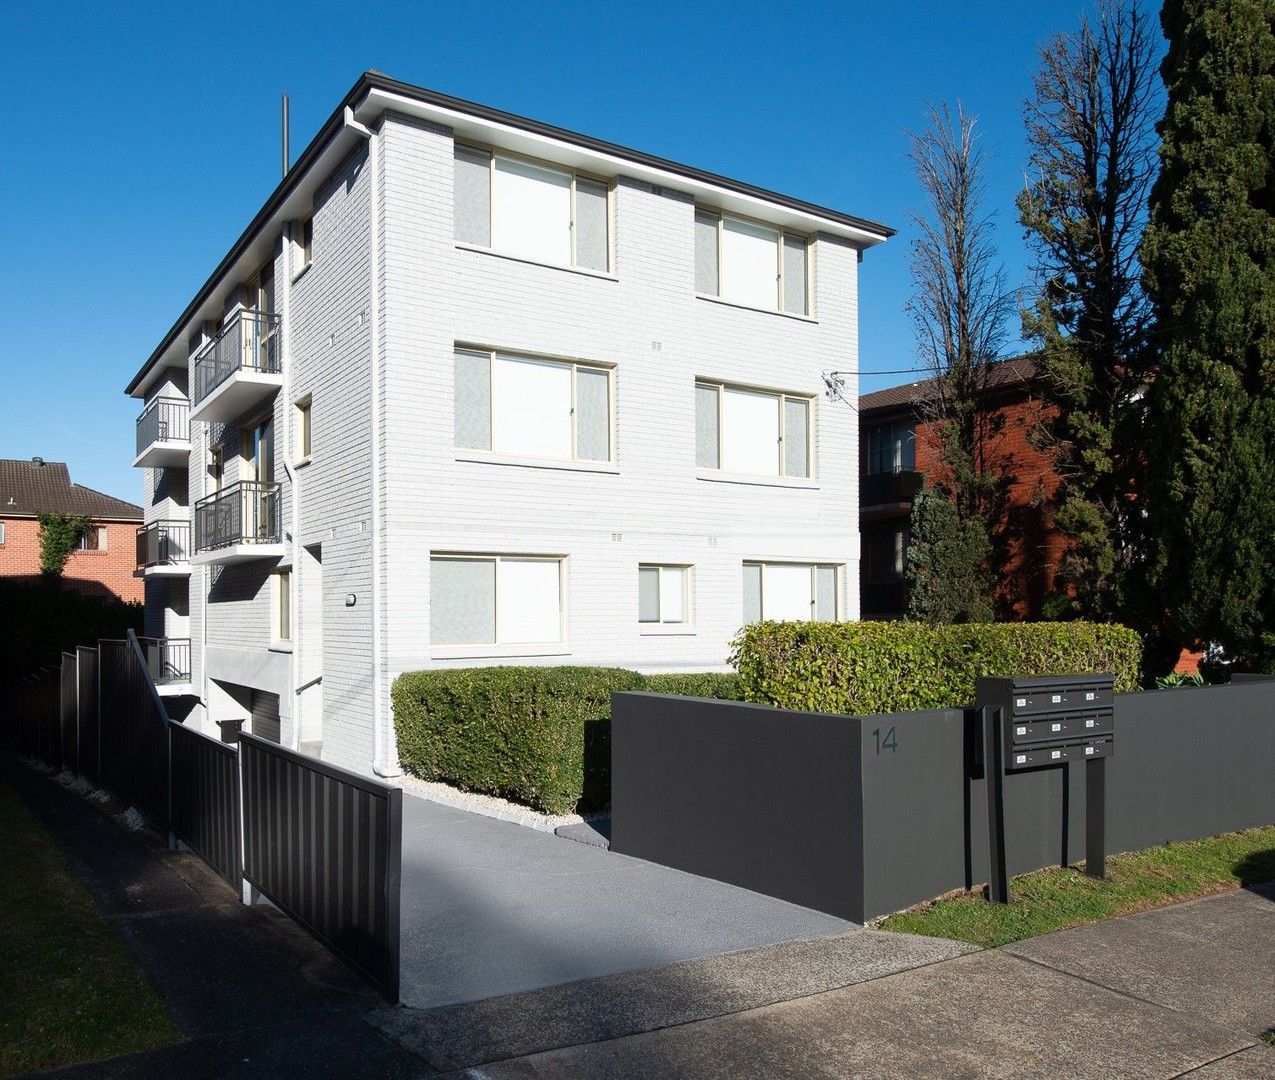 2 bedrooms Apartment / Unit / Flat in UNIT 1/14 MONS AVENUE WEST RYDE NSW, 2114